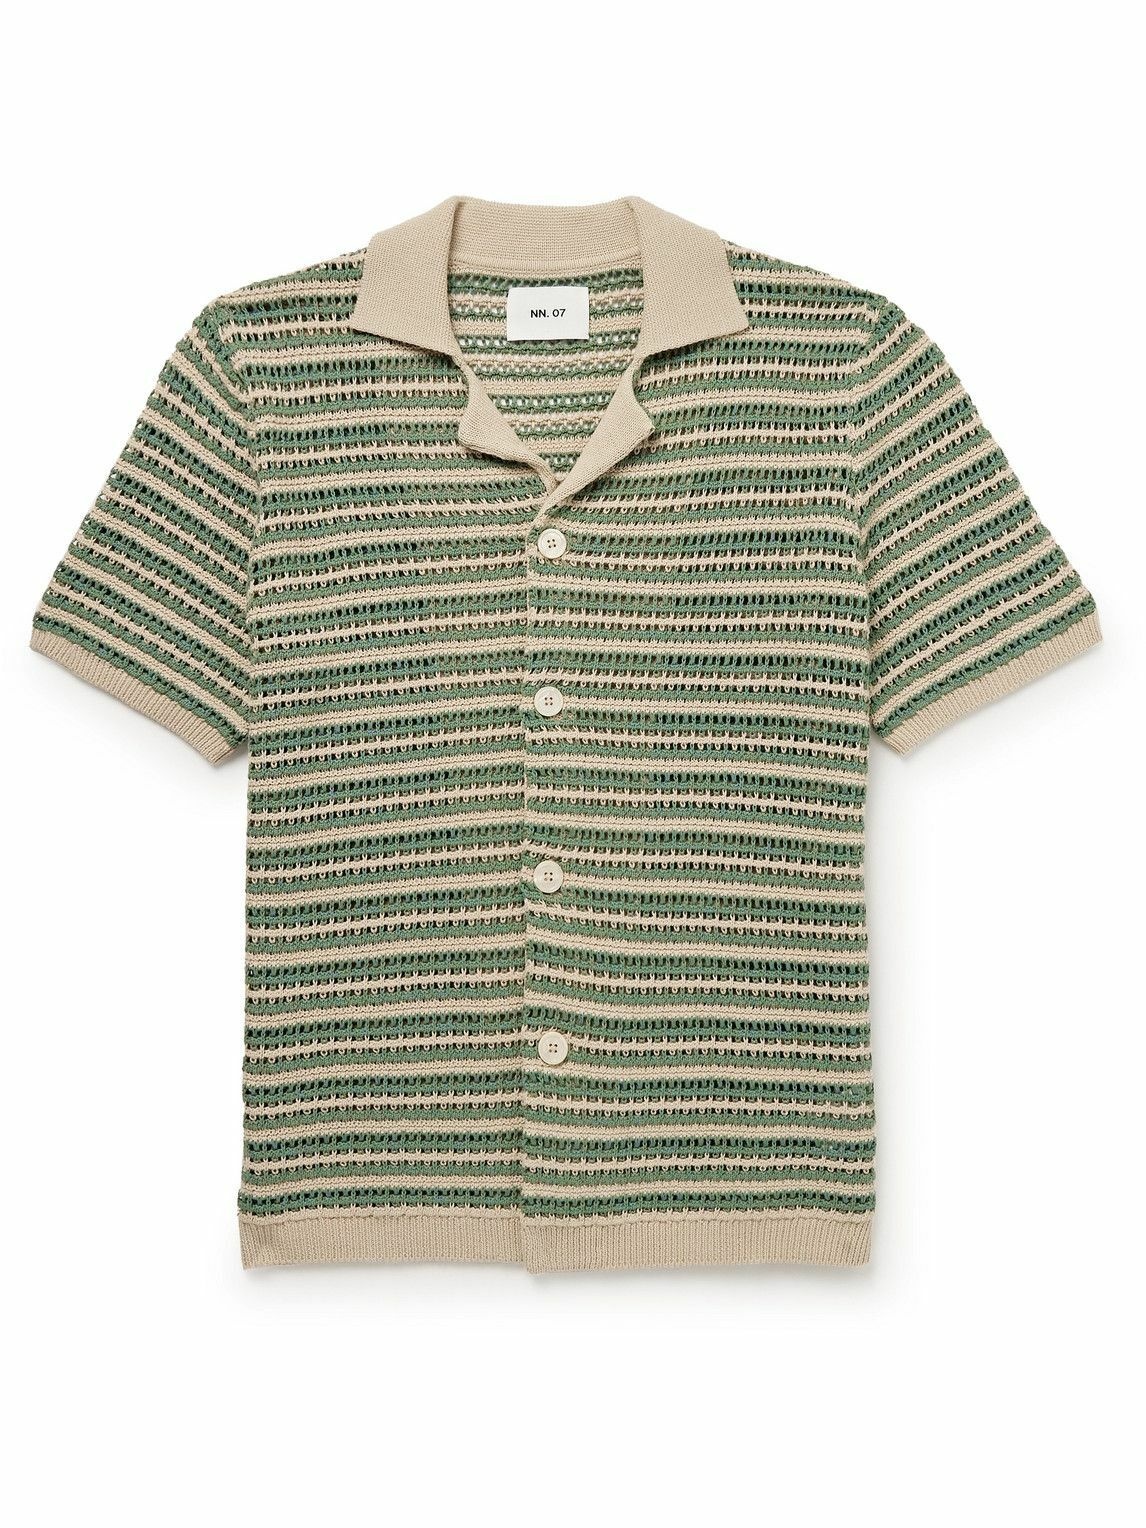 Photo: NN07 - Henry 6636 Camp-Collar Striped Crocheted Organic Cotton Shirt - Green